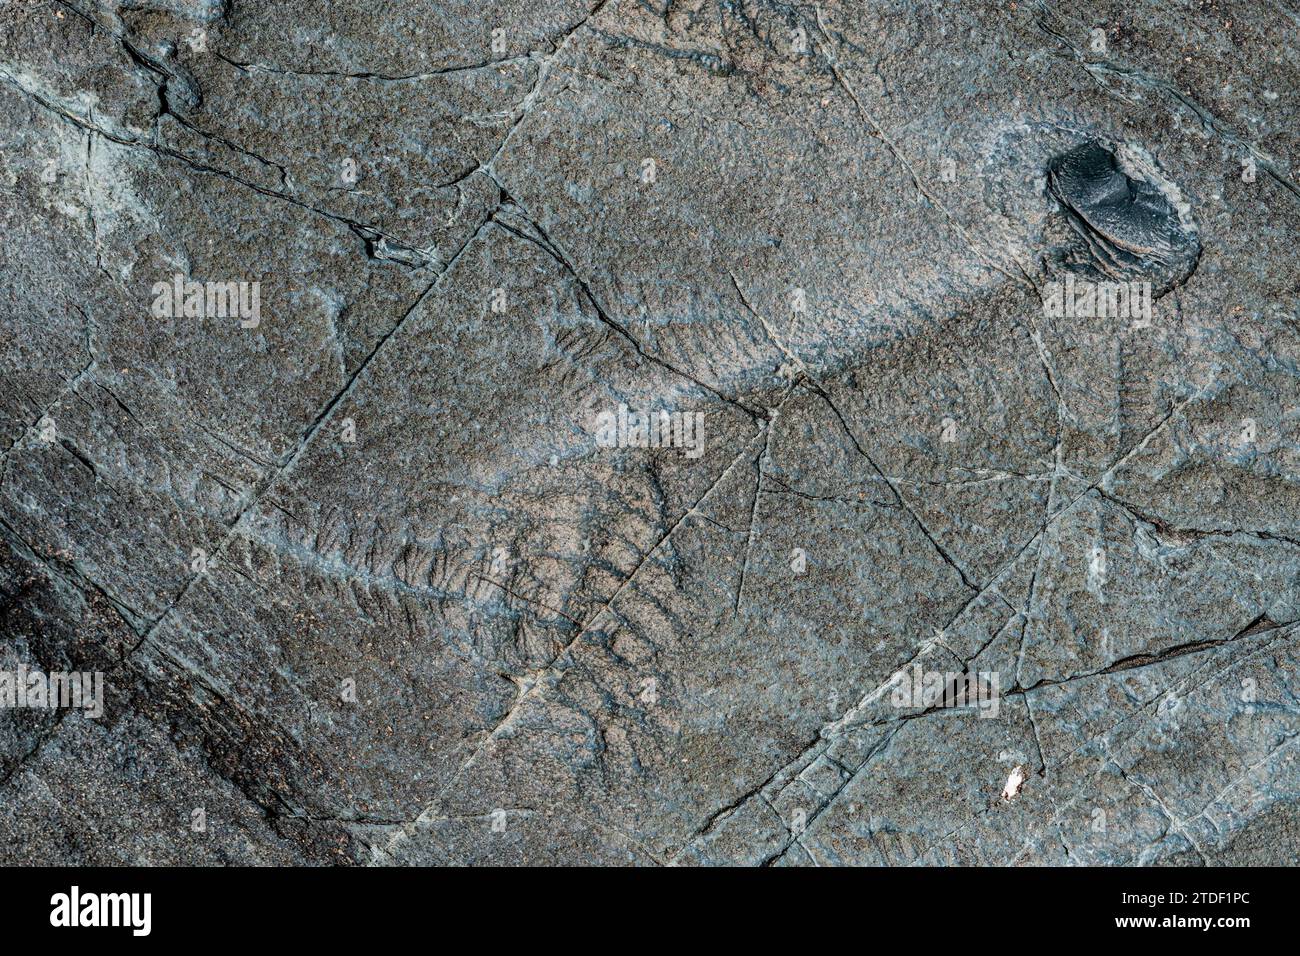 Precambrian fossils, Mistaken Point, UNESCO World Heritage Site, Avalon Peninsula, Newfoundland, Canada, North America Stock Photo